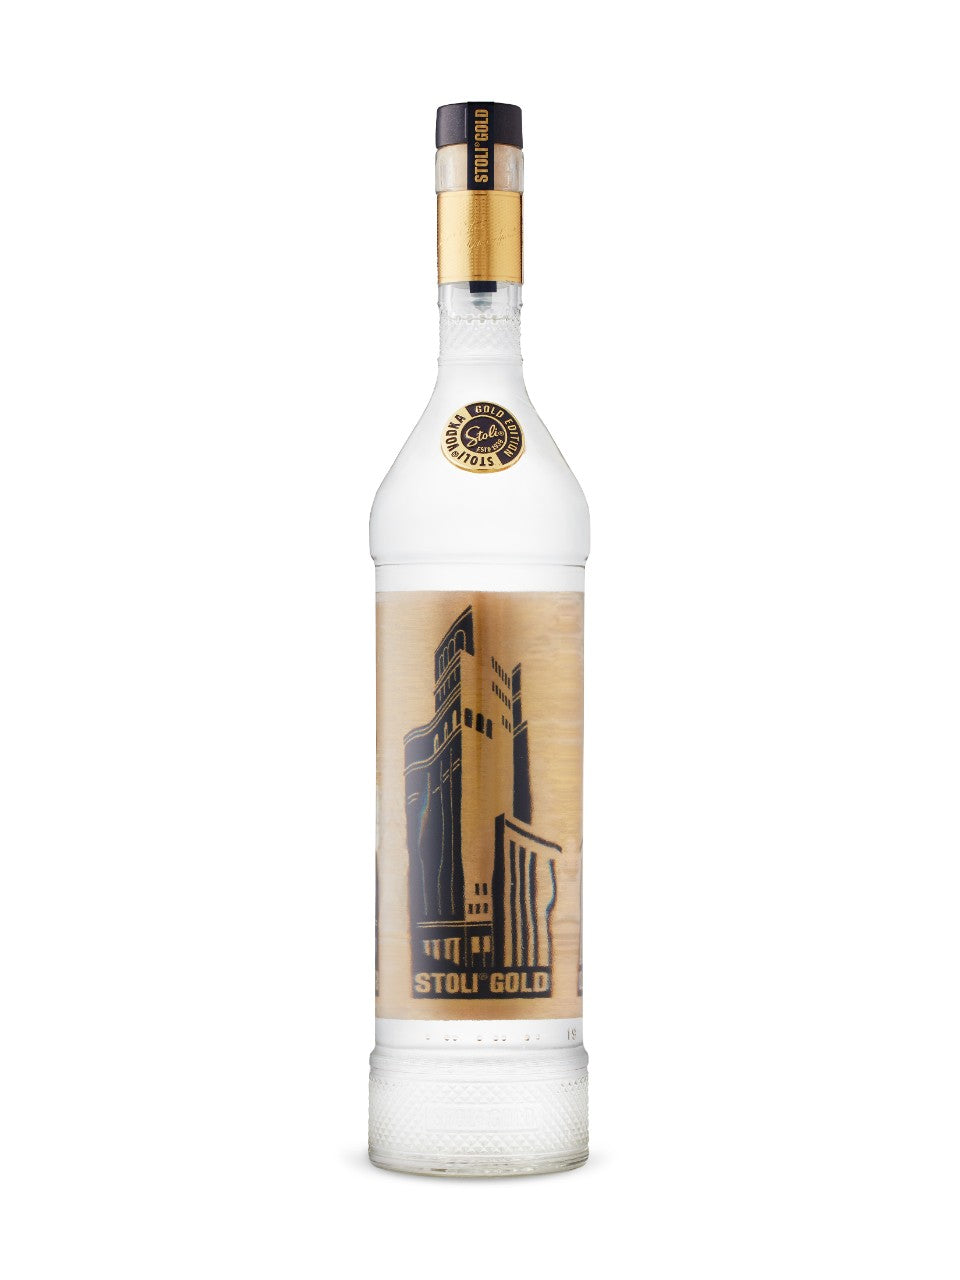 Stoli Gold Vodka 750 mL bottle